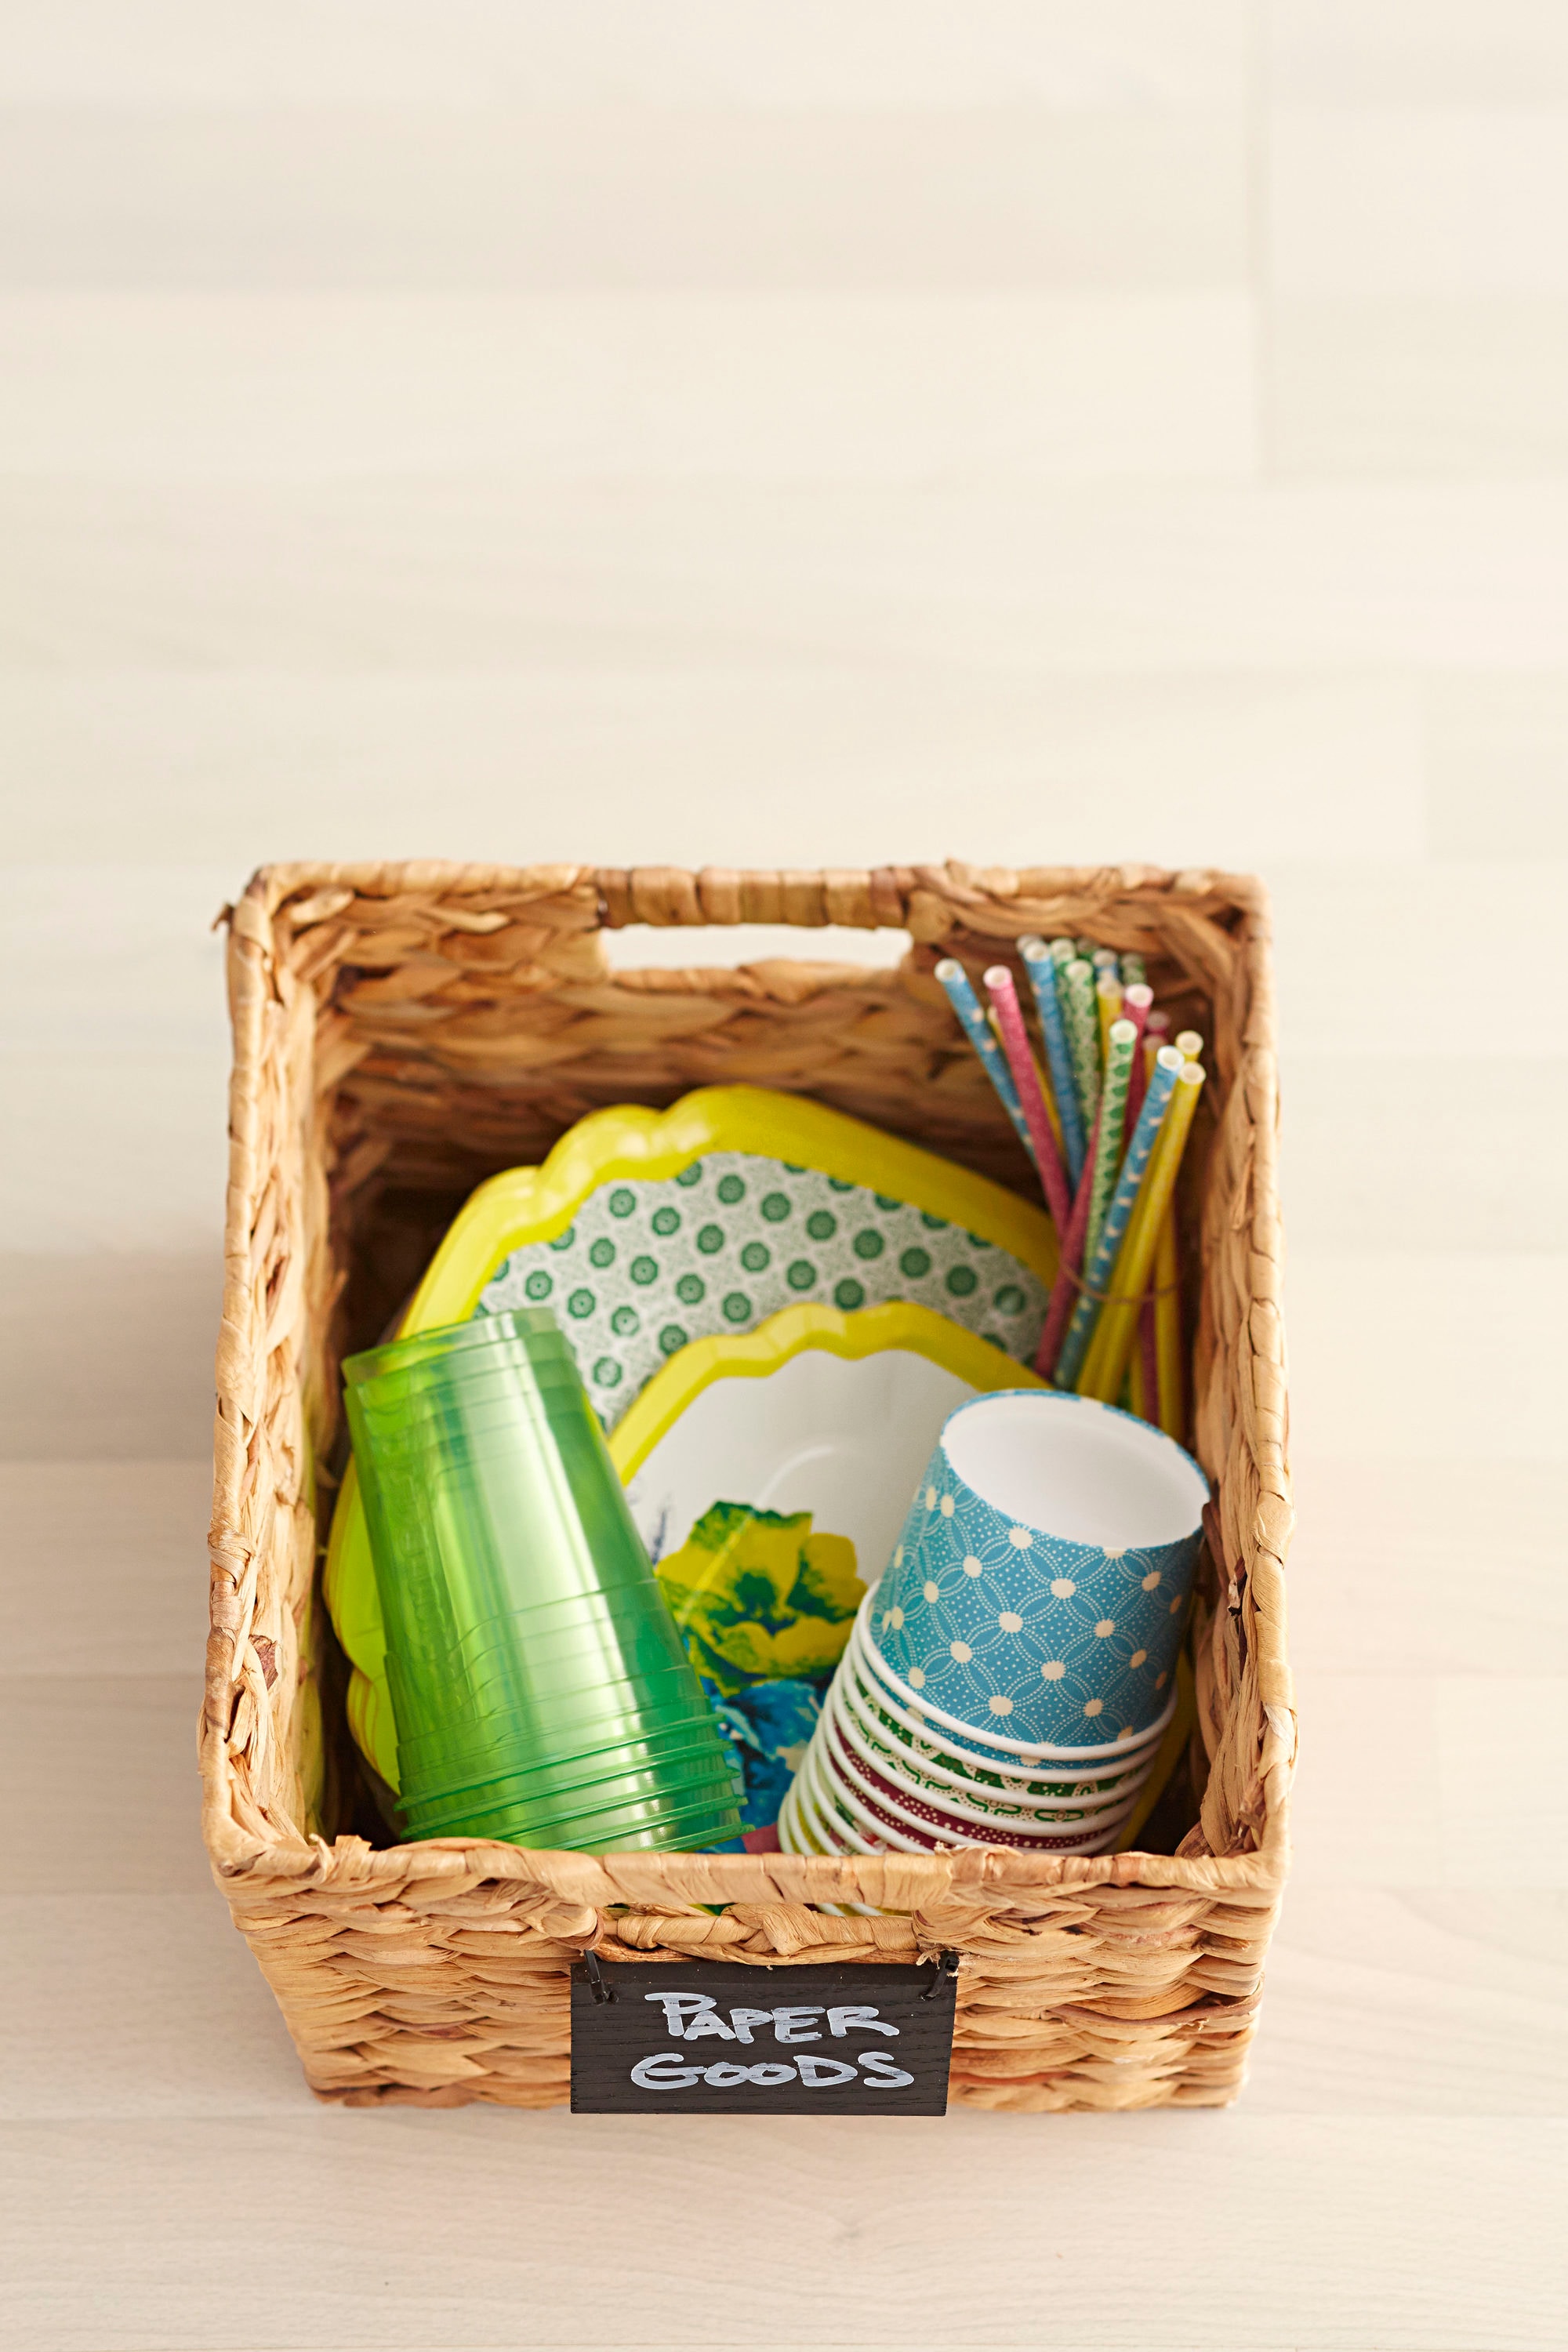 Reserved for Melanie-yarn Coiled Basket Storage Basket Aqua 